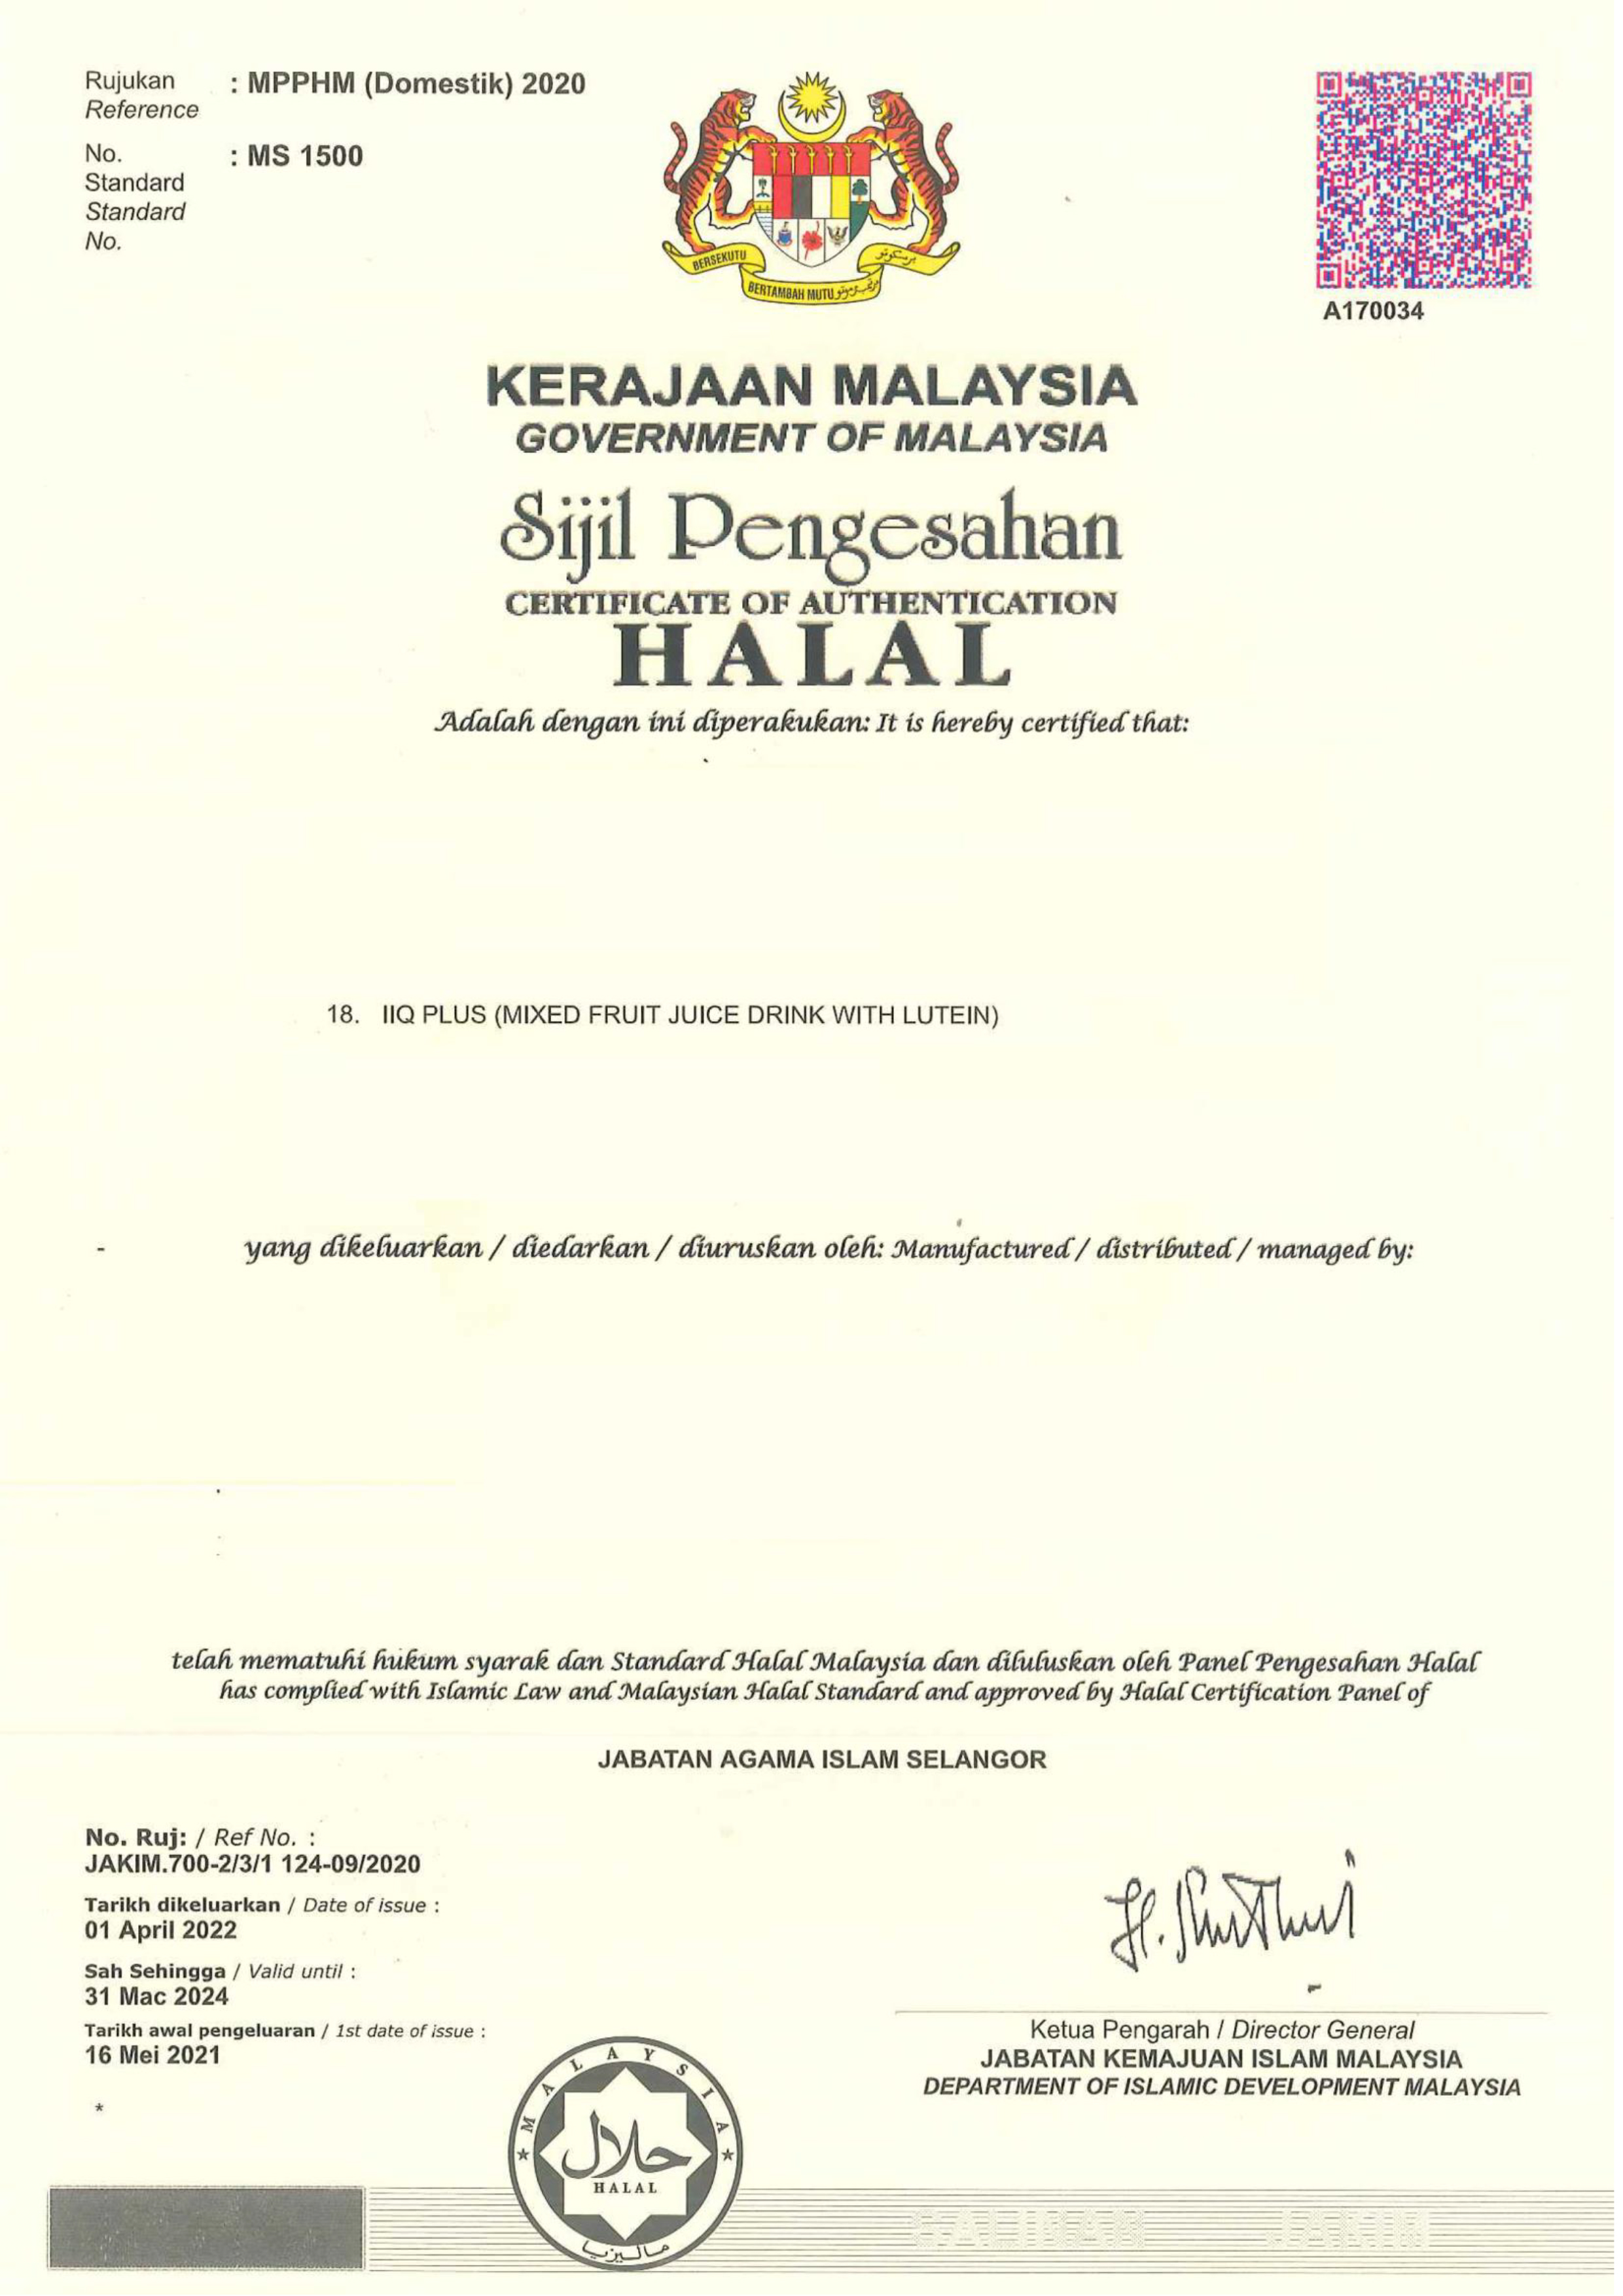 IIQ Plus Halal Certificate